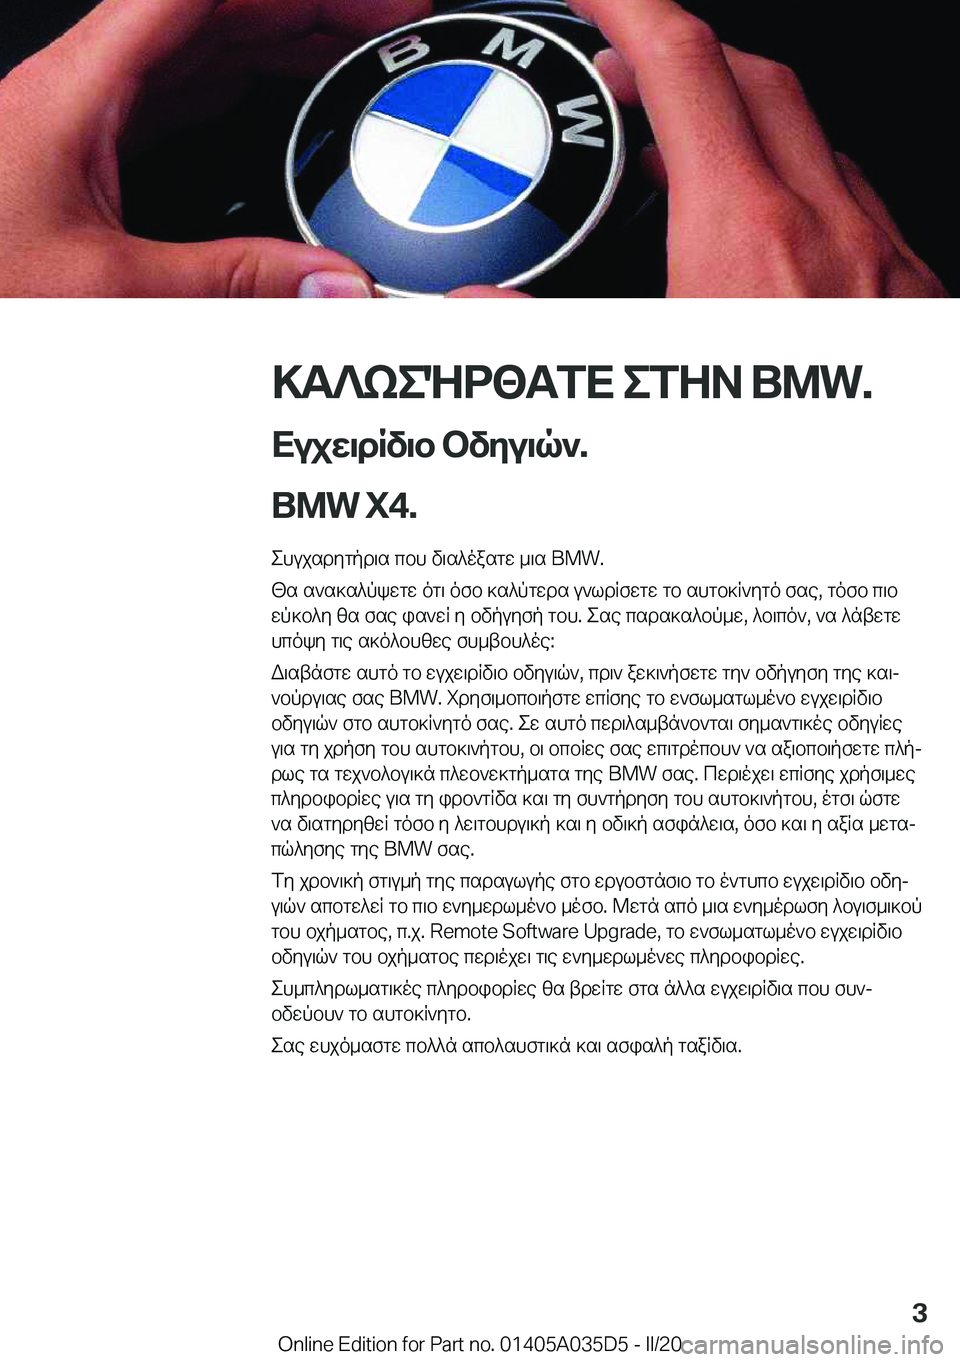 BMW X4 2020  ΟΔΗΓΌΣ ΧΡΉΣΗΣ (in Greek) >T?keNd<TfX�efZA��B�M�W�.
Xujw\dRv\b�bvyu\q`�.
�B�M�W��X�4�. ehujsdygpd\s�cbh�v\s^oasgw�_\s��B�M�W�.
[s�s`s]s^pkwgw�o